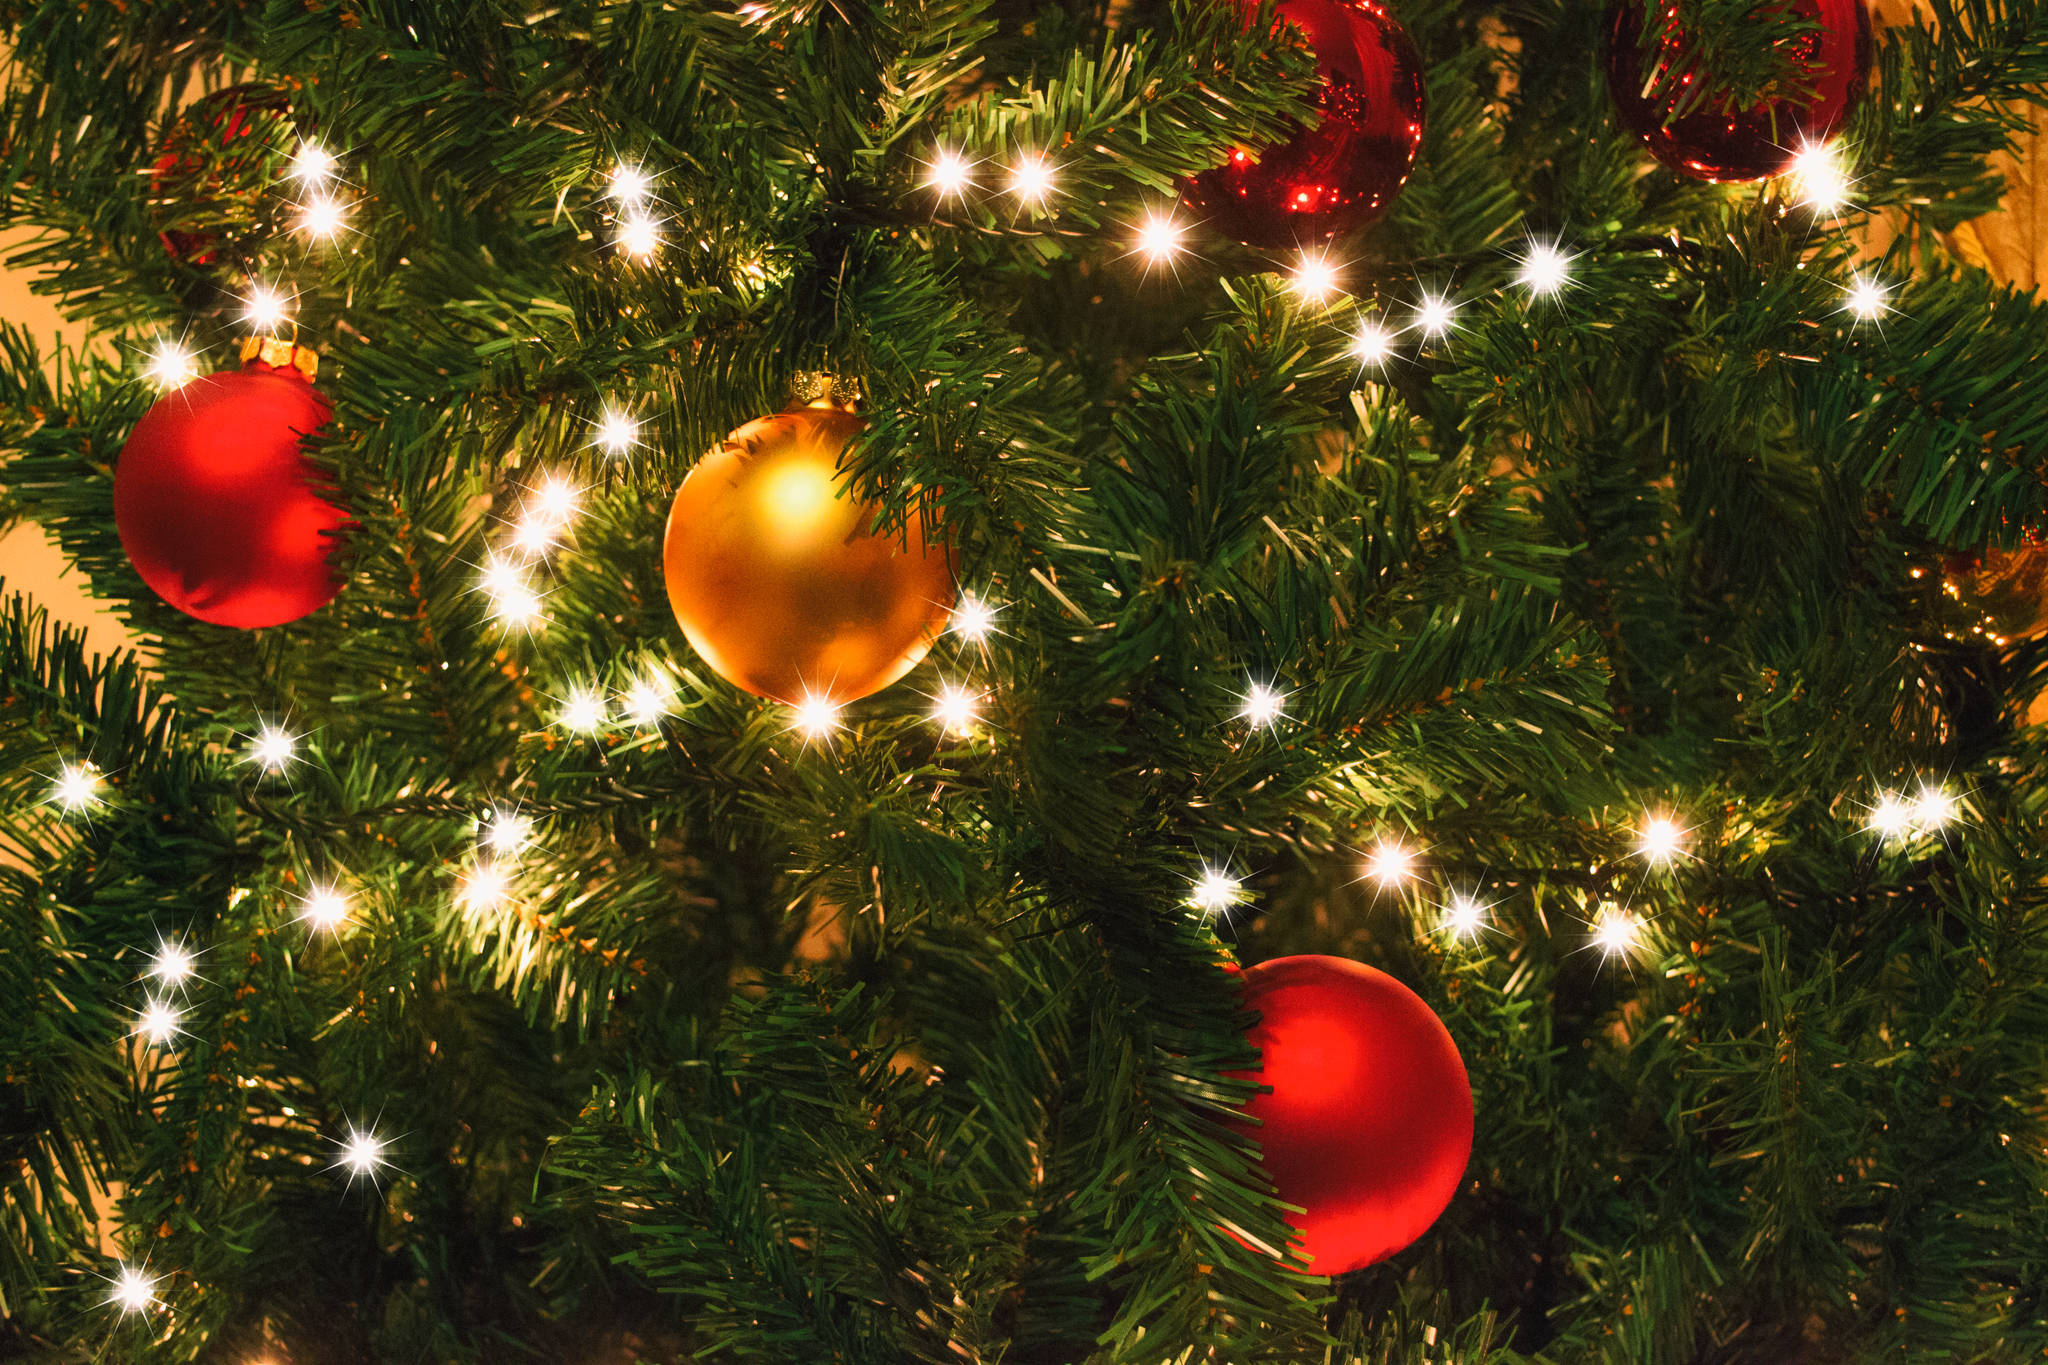 Silverdale Christmas tree lighting set for Saturday, Nov. 30